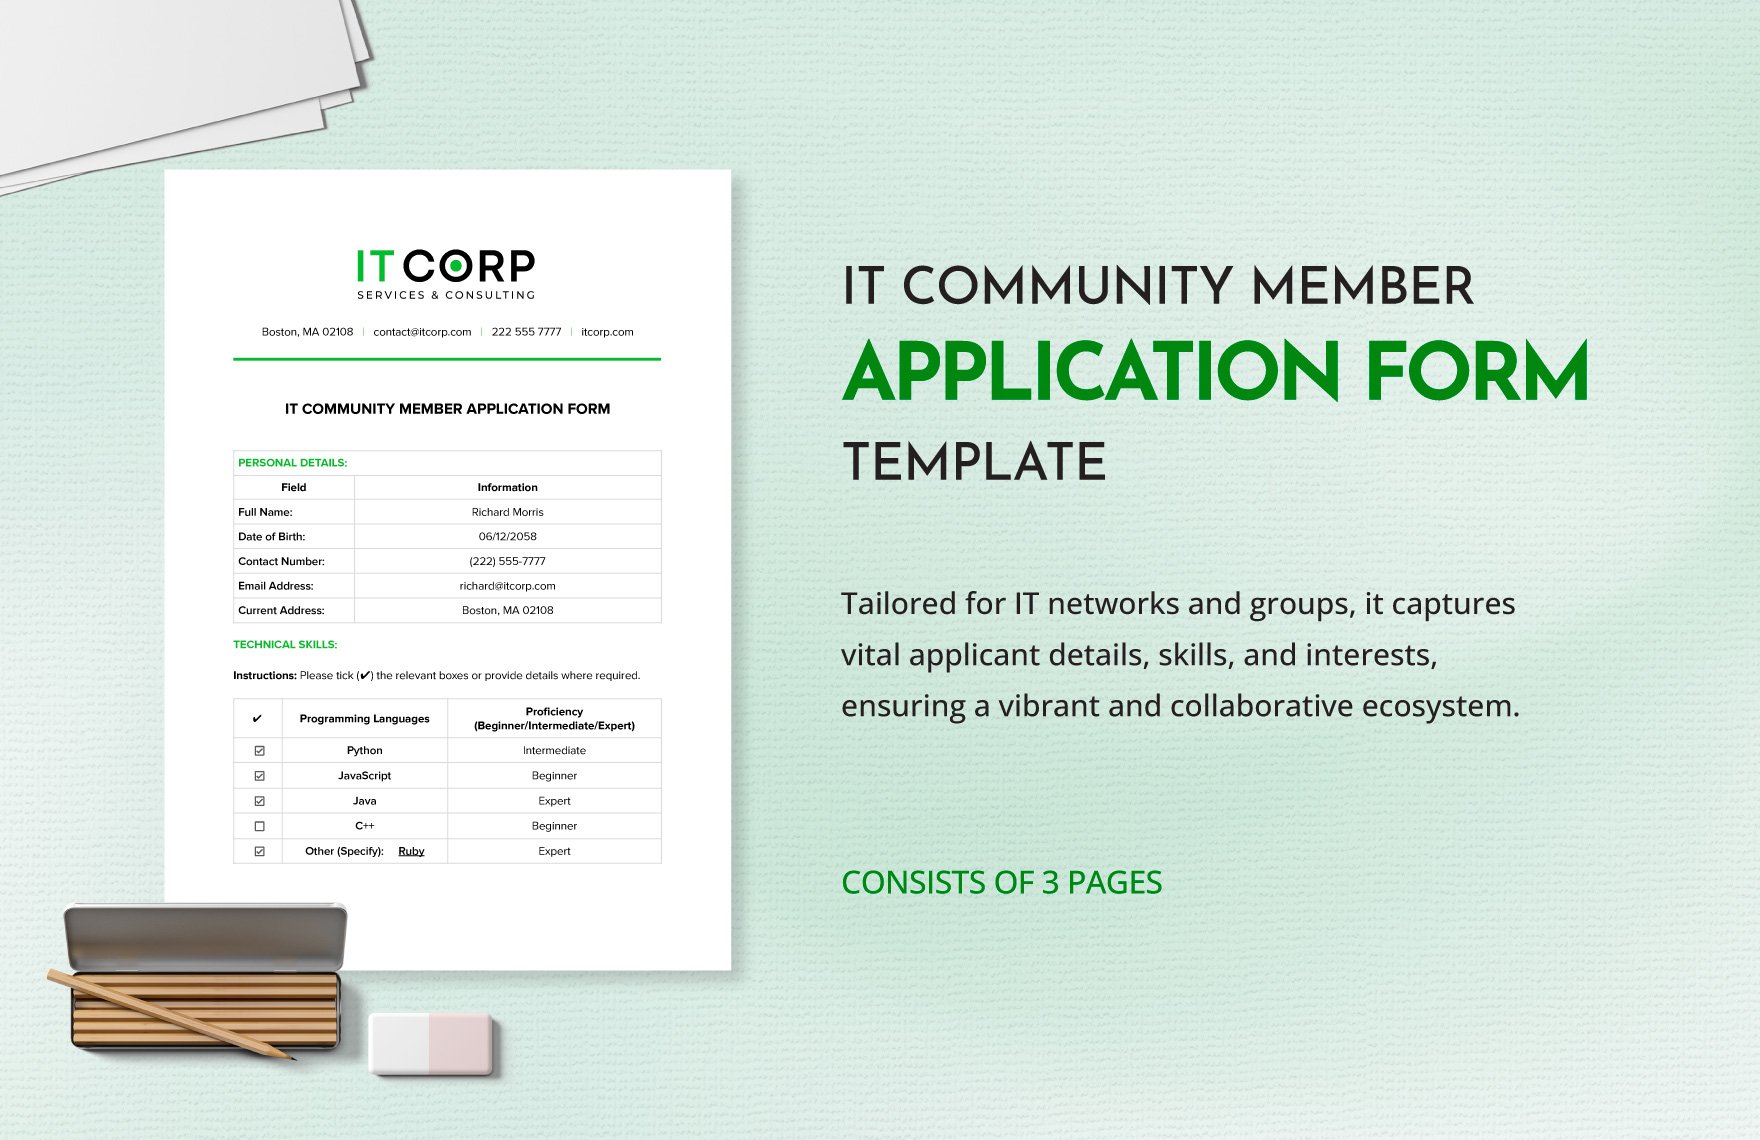 IT Community Member Application Form Template in Word, Google Docs, PDF